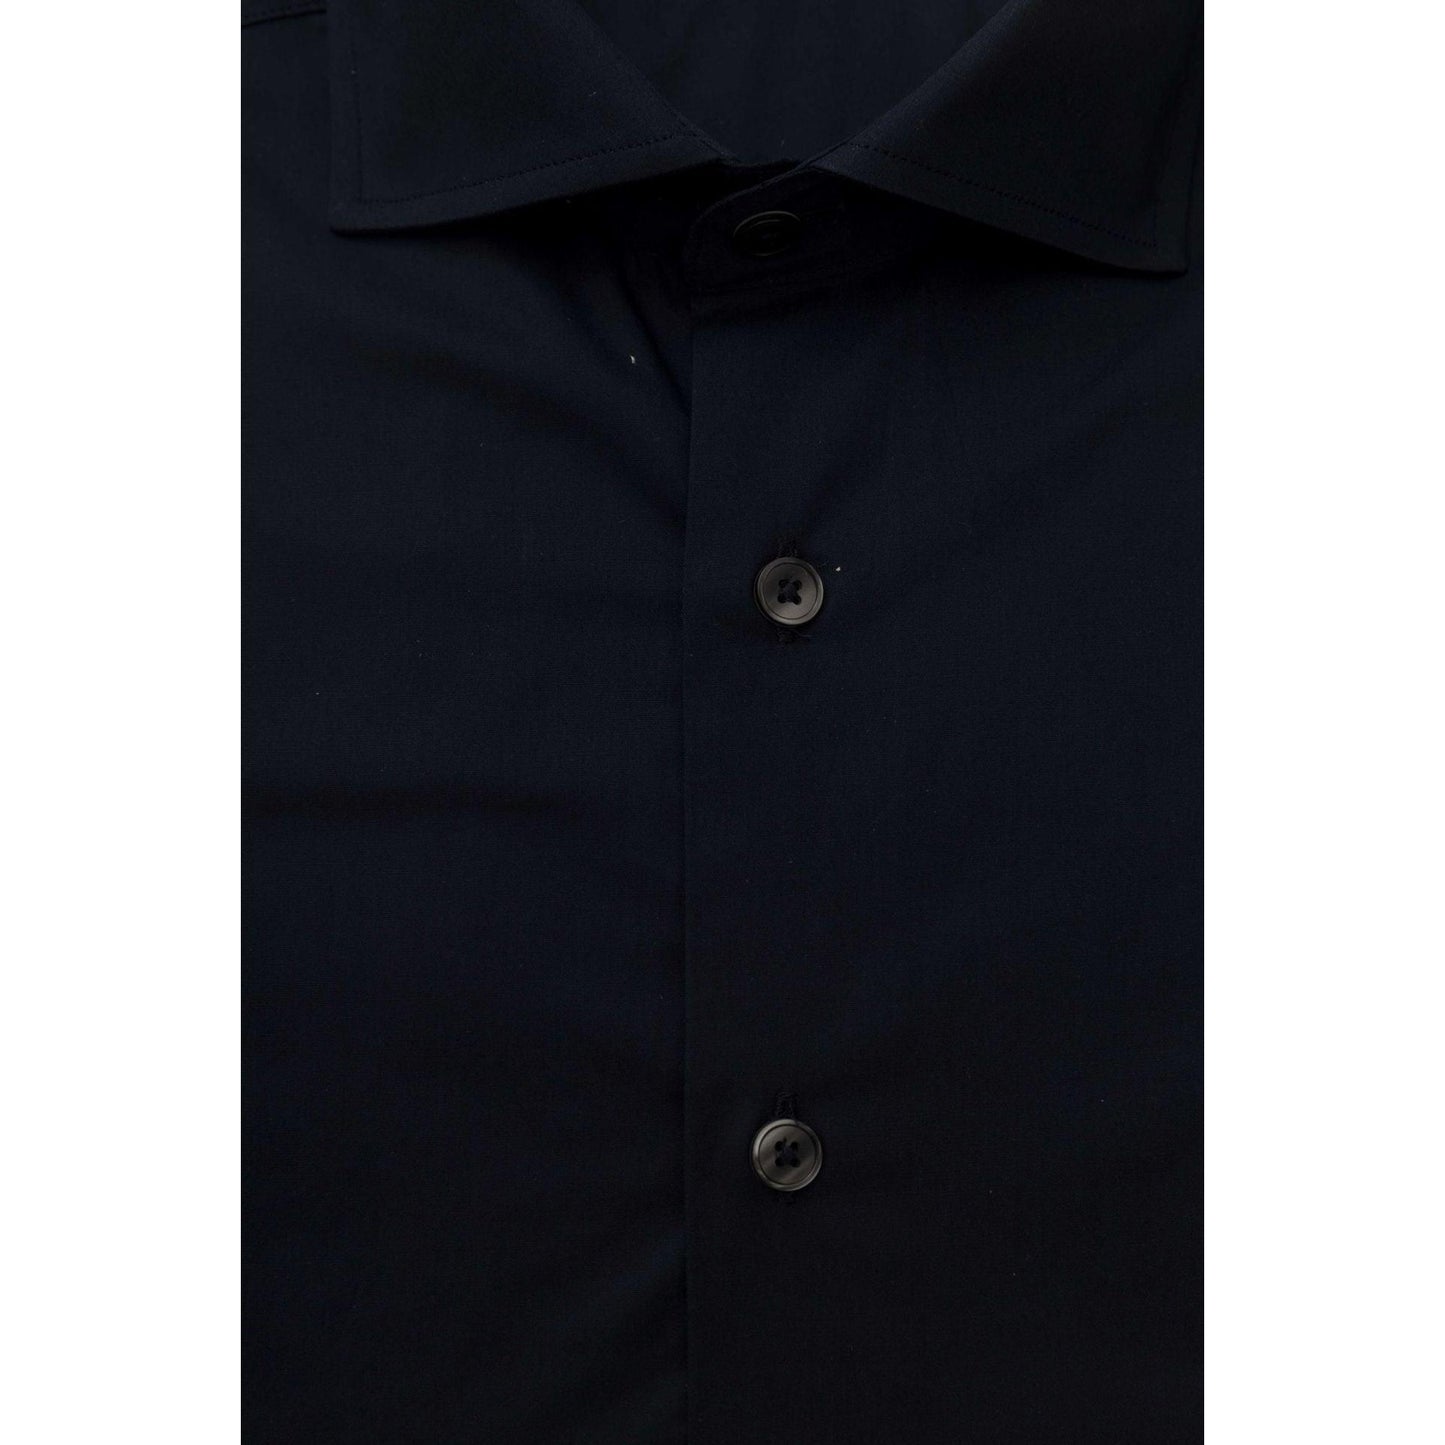 Navy Blue Men Dress Shirts - Bagutta Shirts - Shirt - Guocali